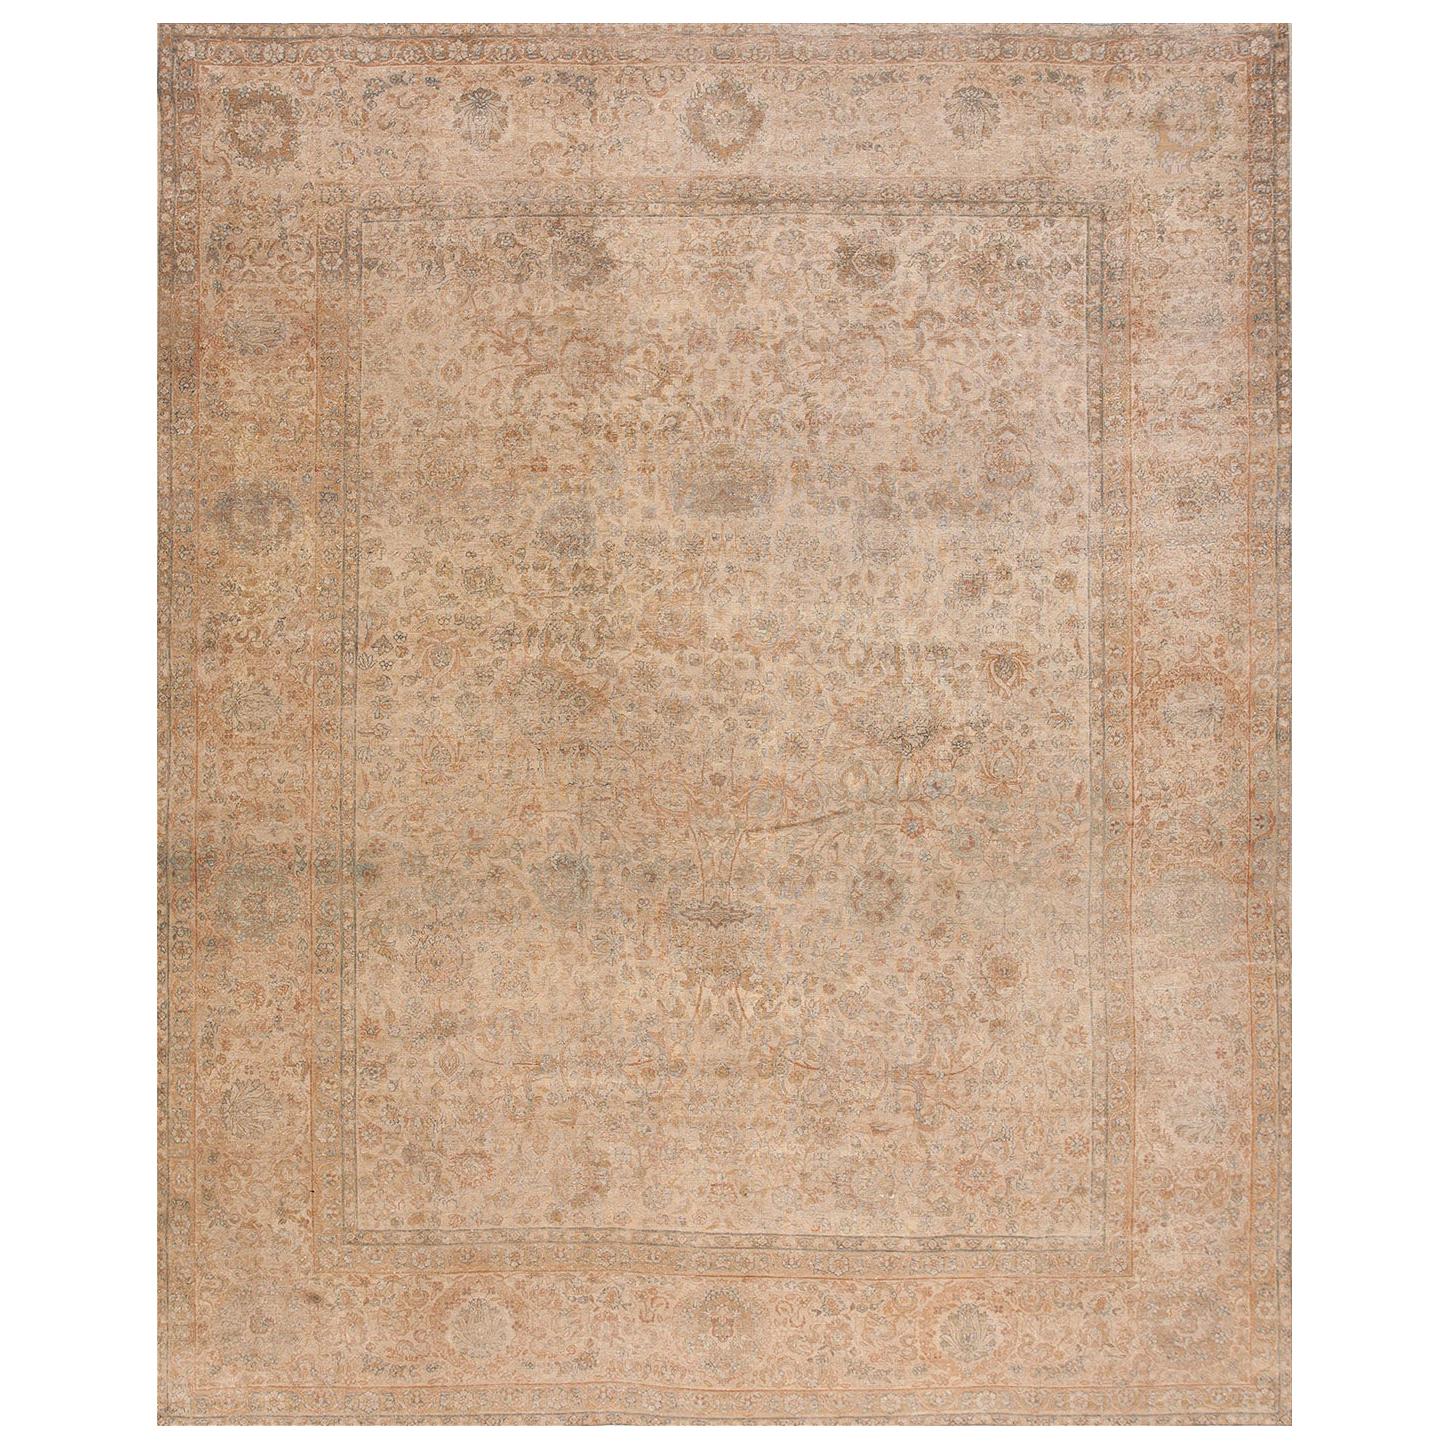 1930s Persian Kerman Carpet ( 9'3" x 11'9" - 282 x 358 cm ) For Sale